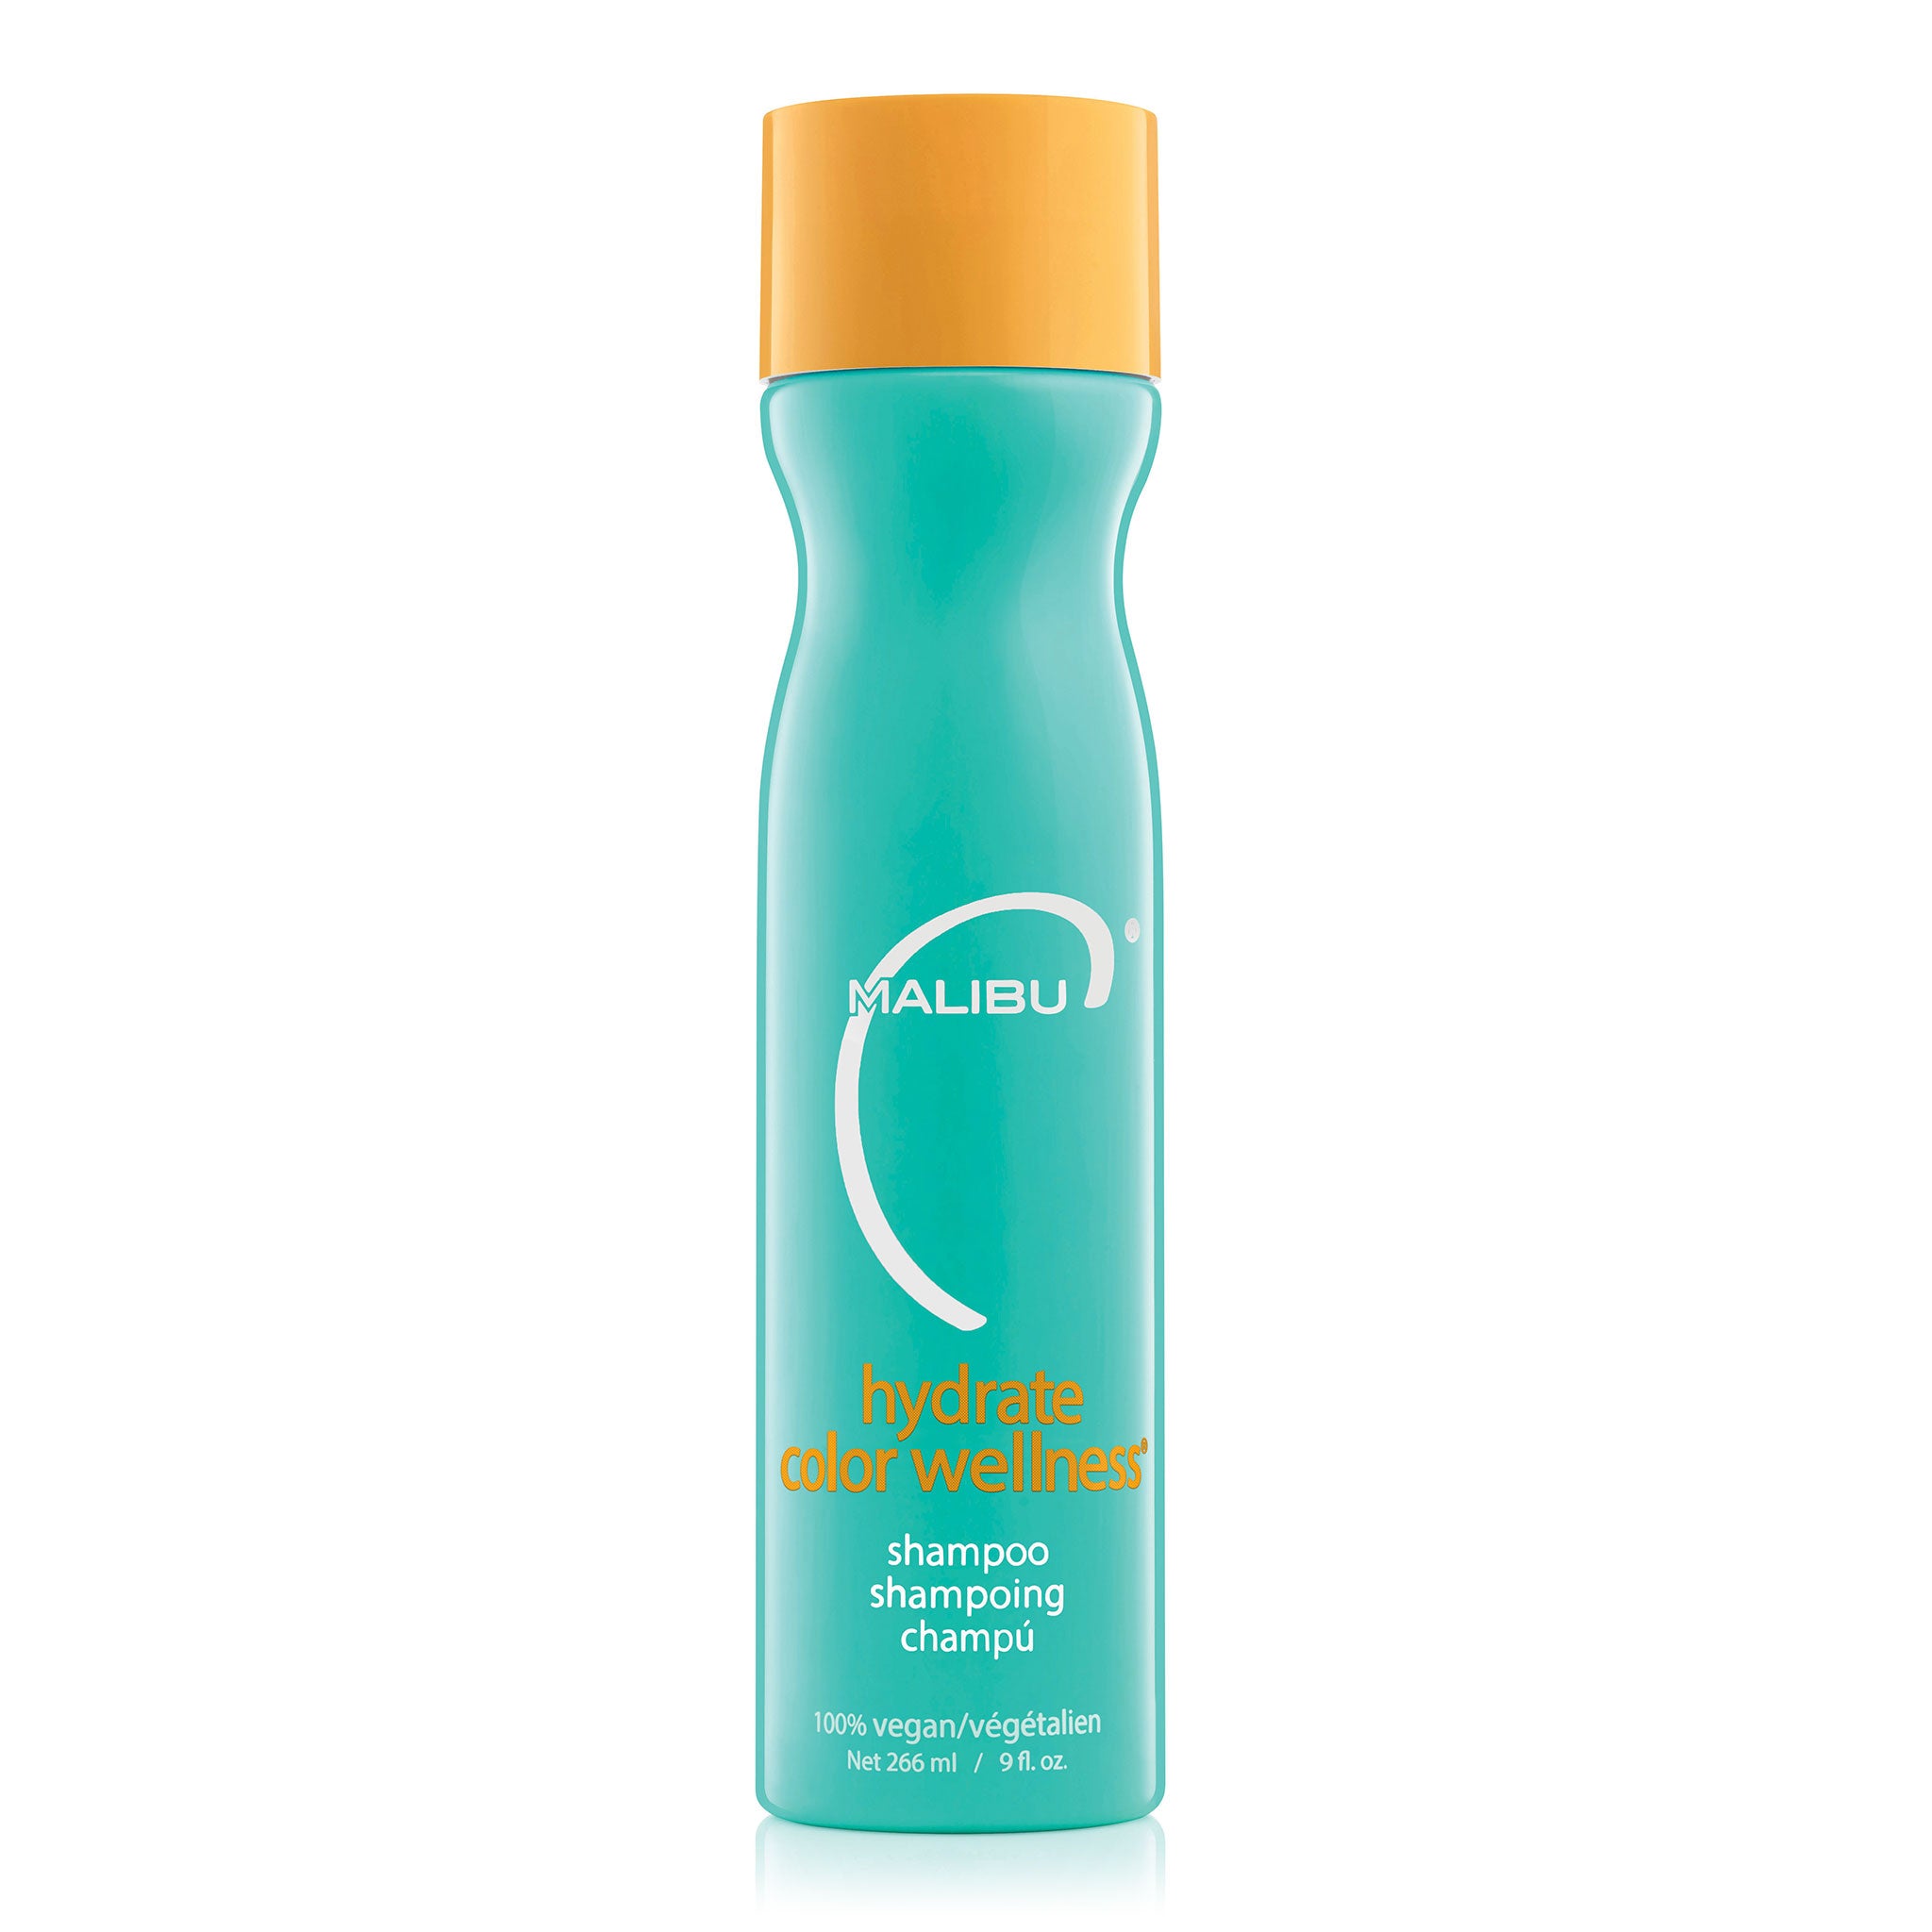 Hydrate Colour Wellness Shampoo 266ml